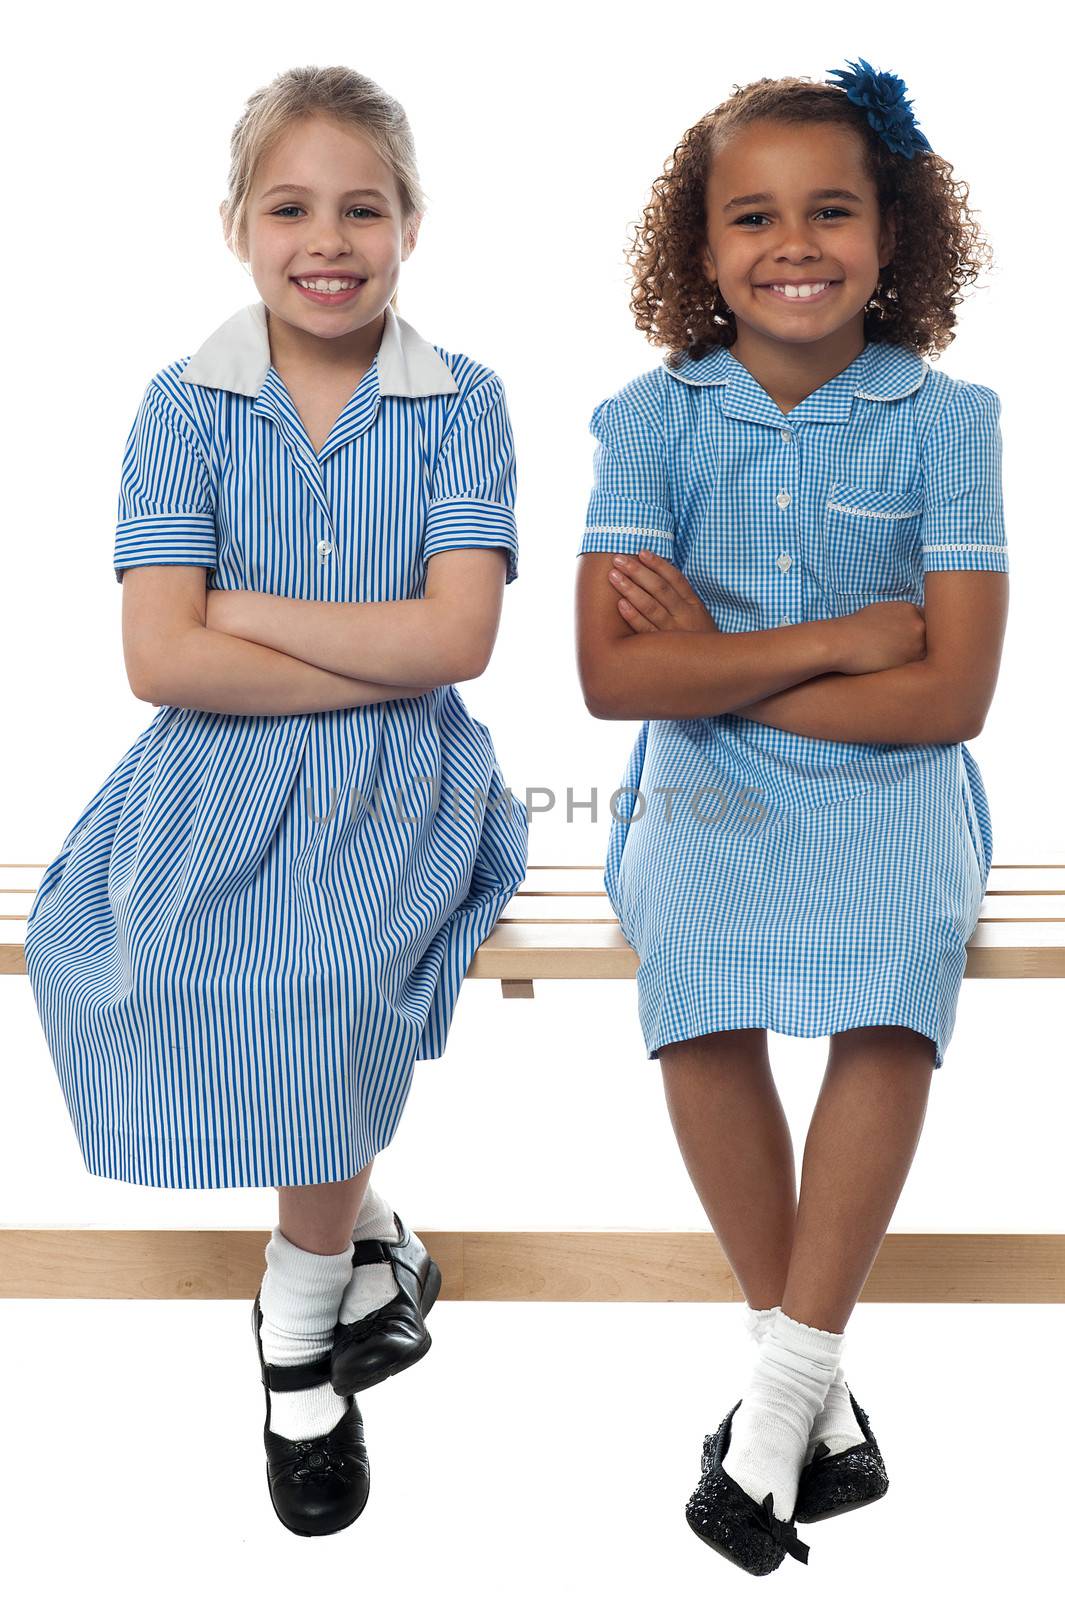 Cheerful school girls posing confidently